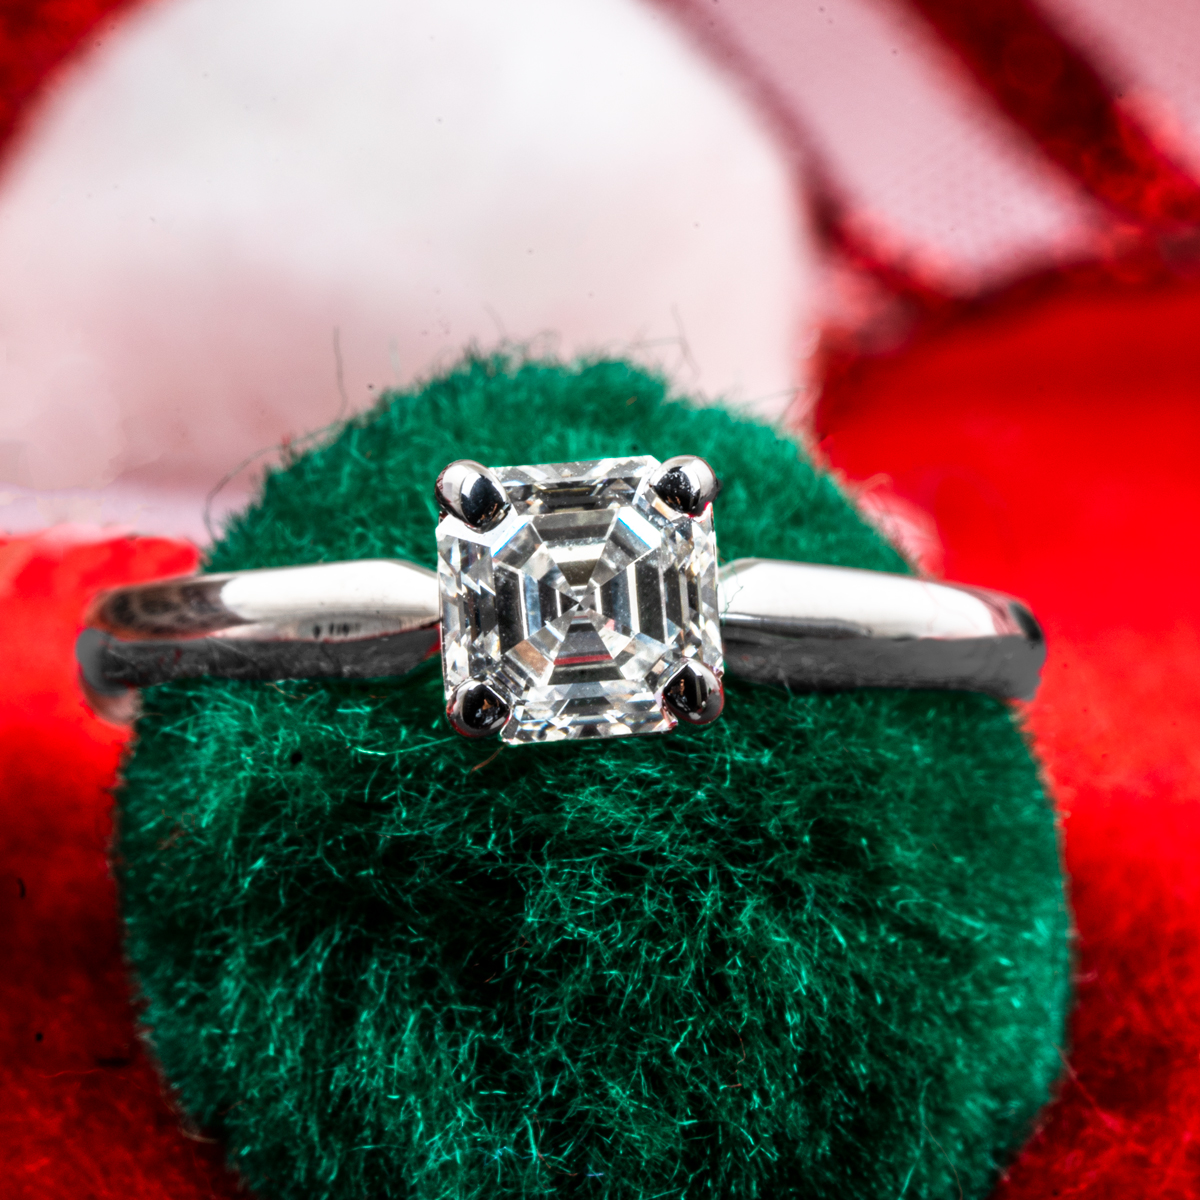 White gold solitaire asscher cut diamond engagement ring.